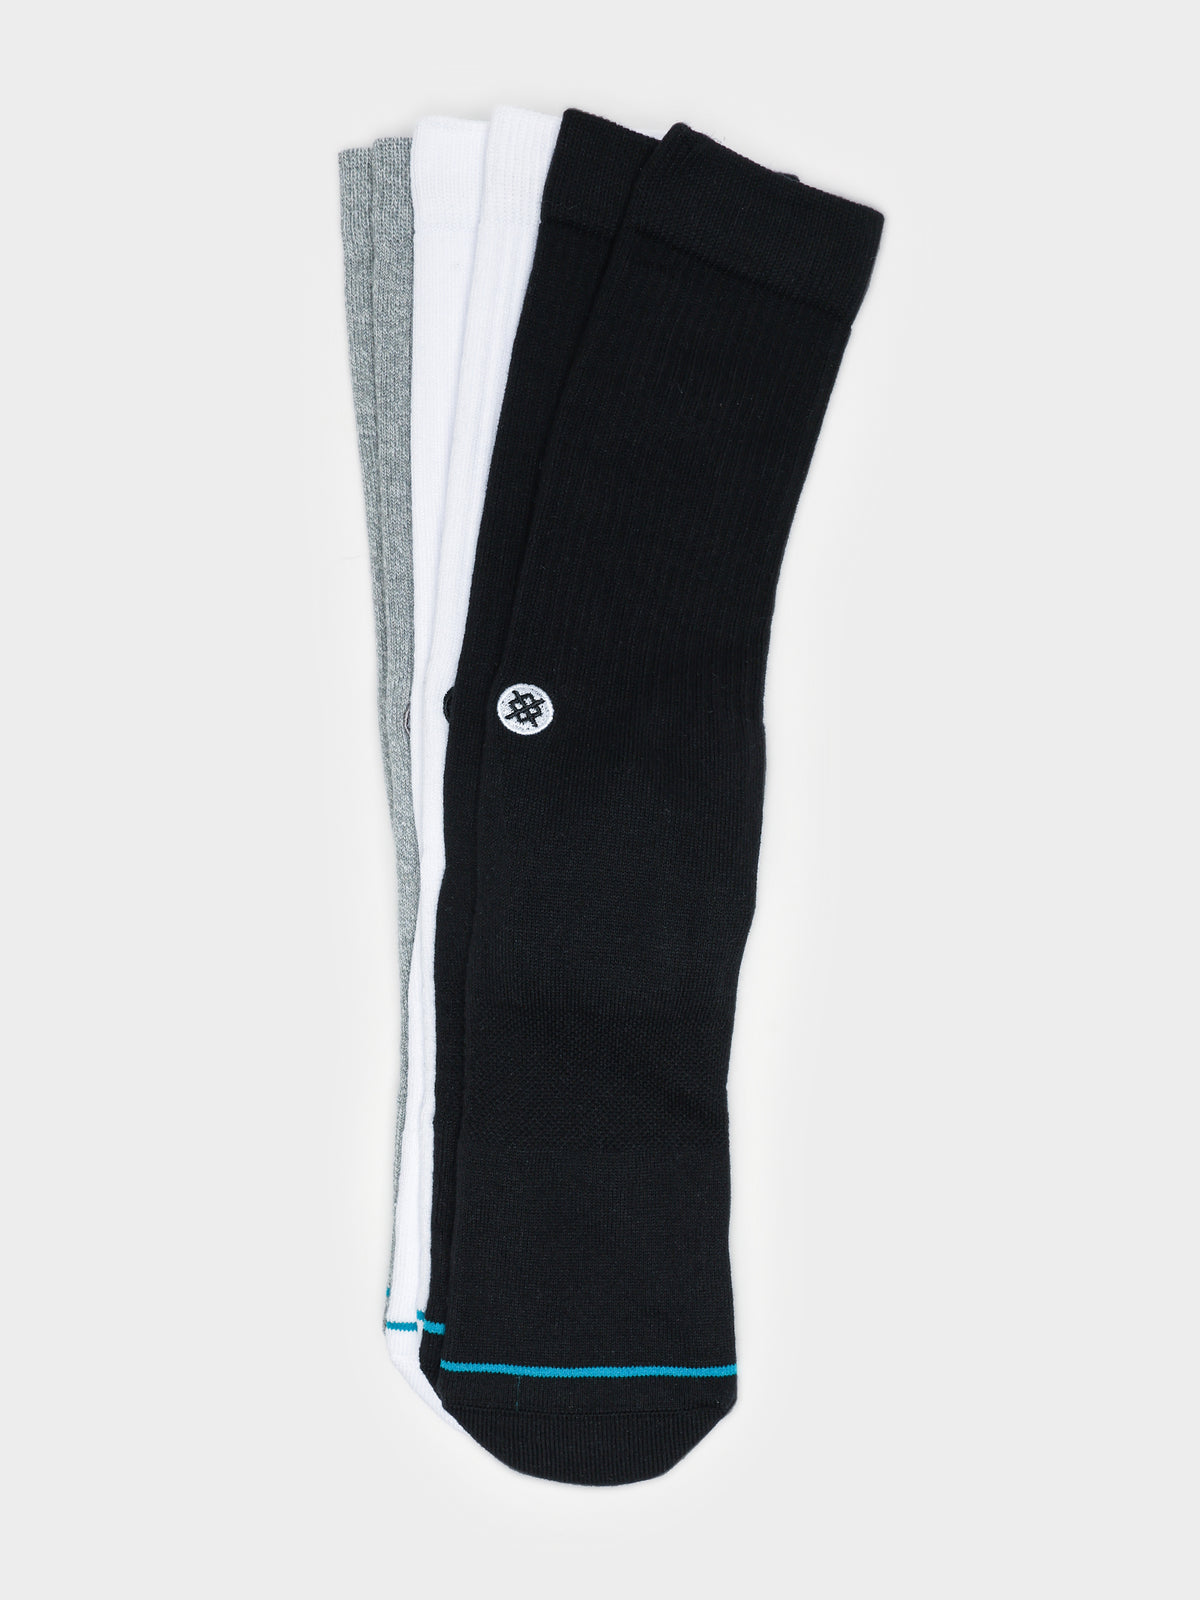 3 Pairs of Icon Crew Socks in Black, White &amp; Grey